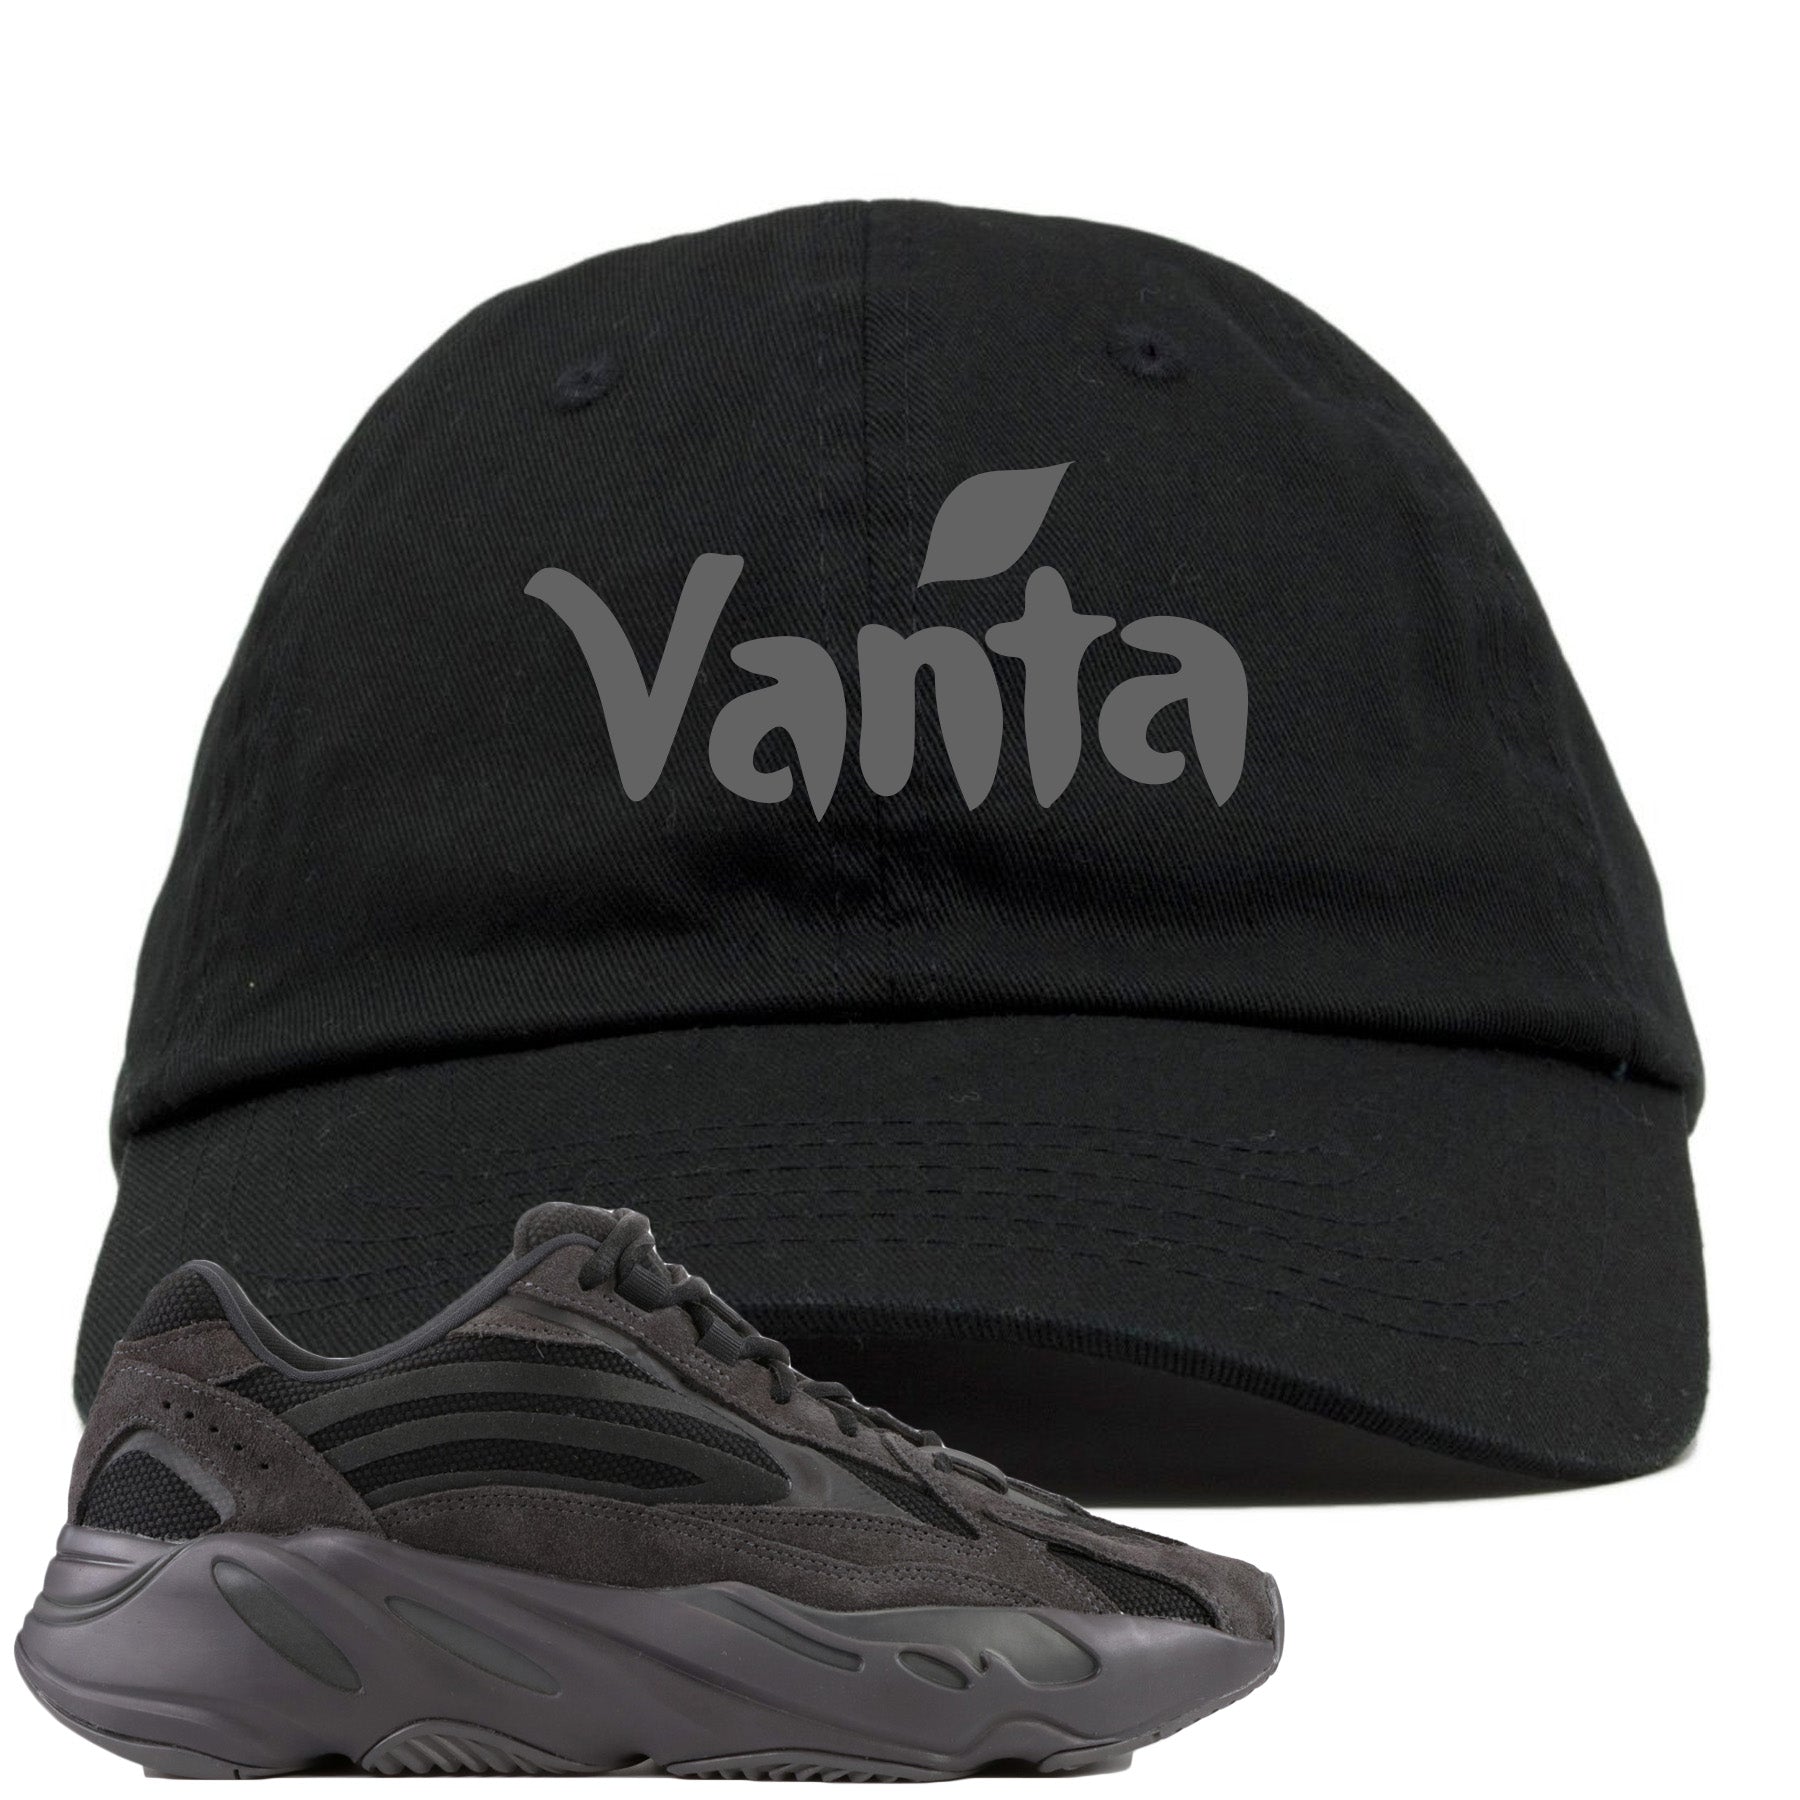 yeezy vanta black